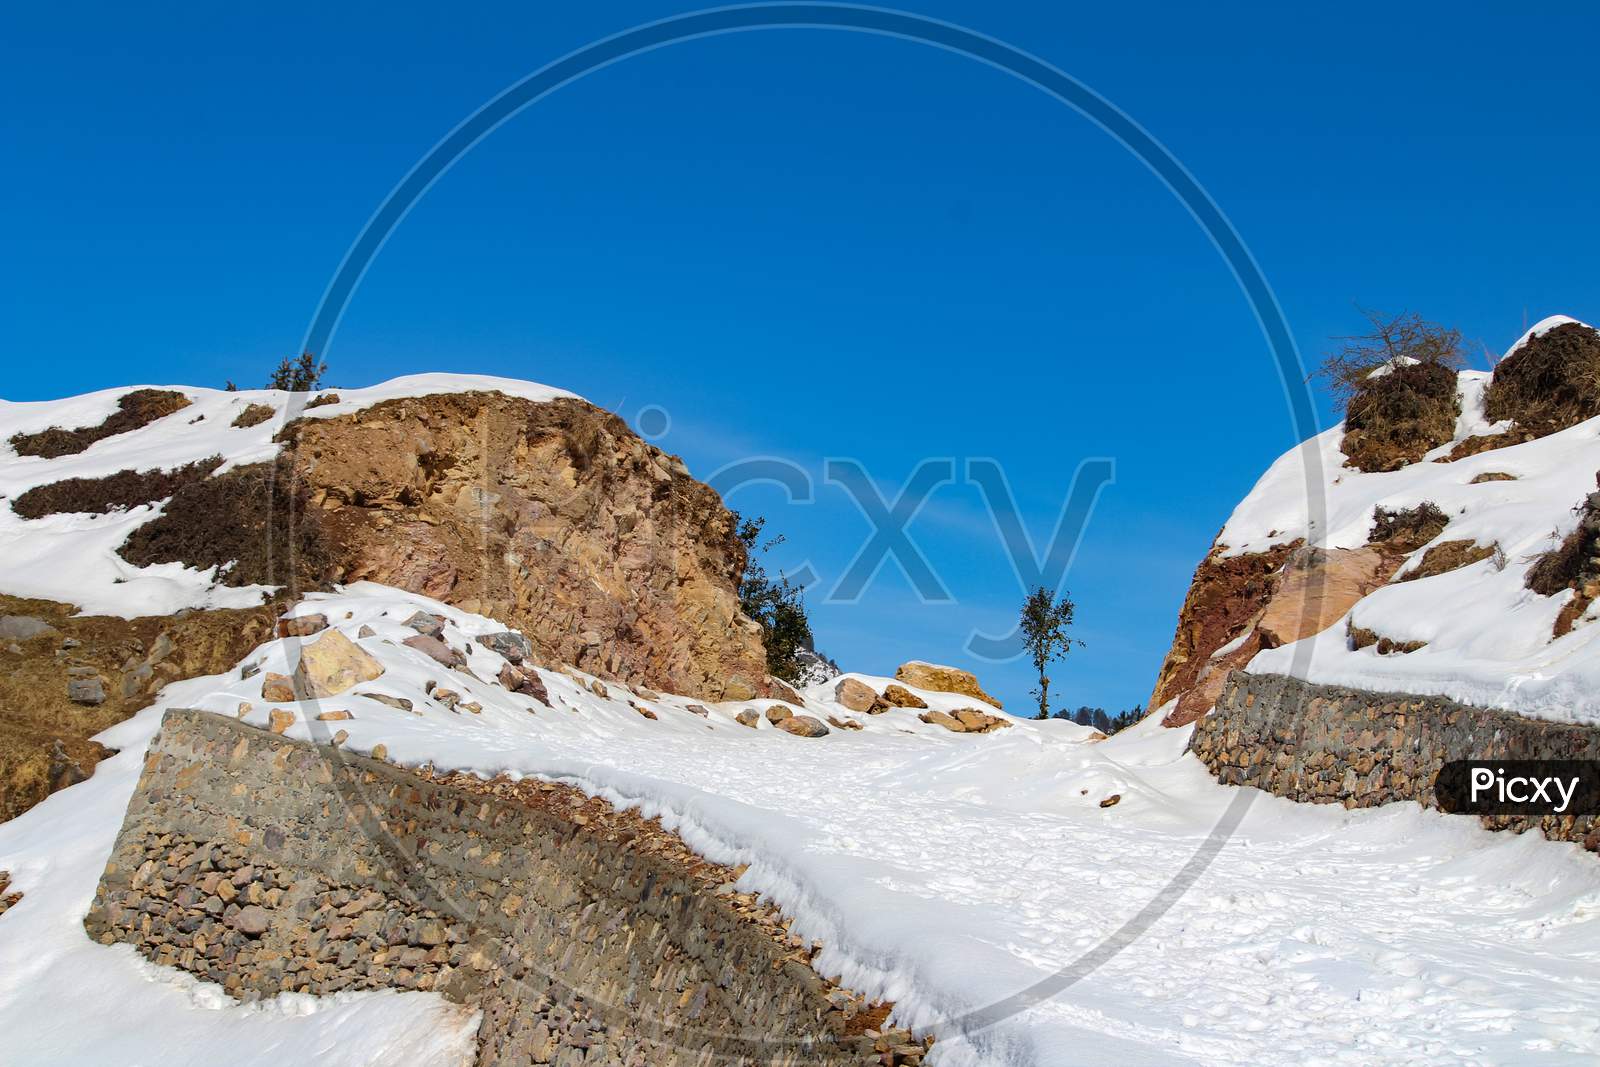 A Path Through Snowy Mountain With Blue Sky